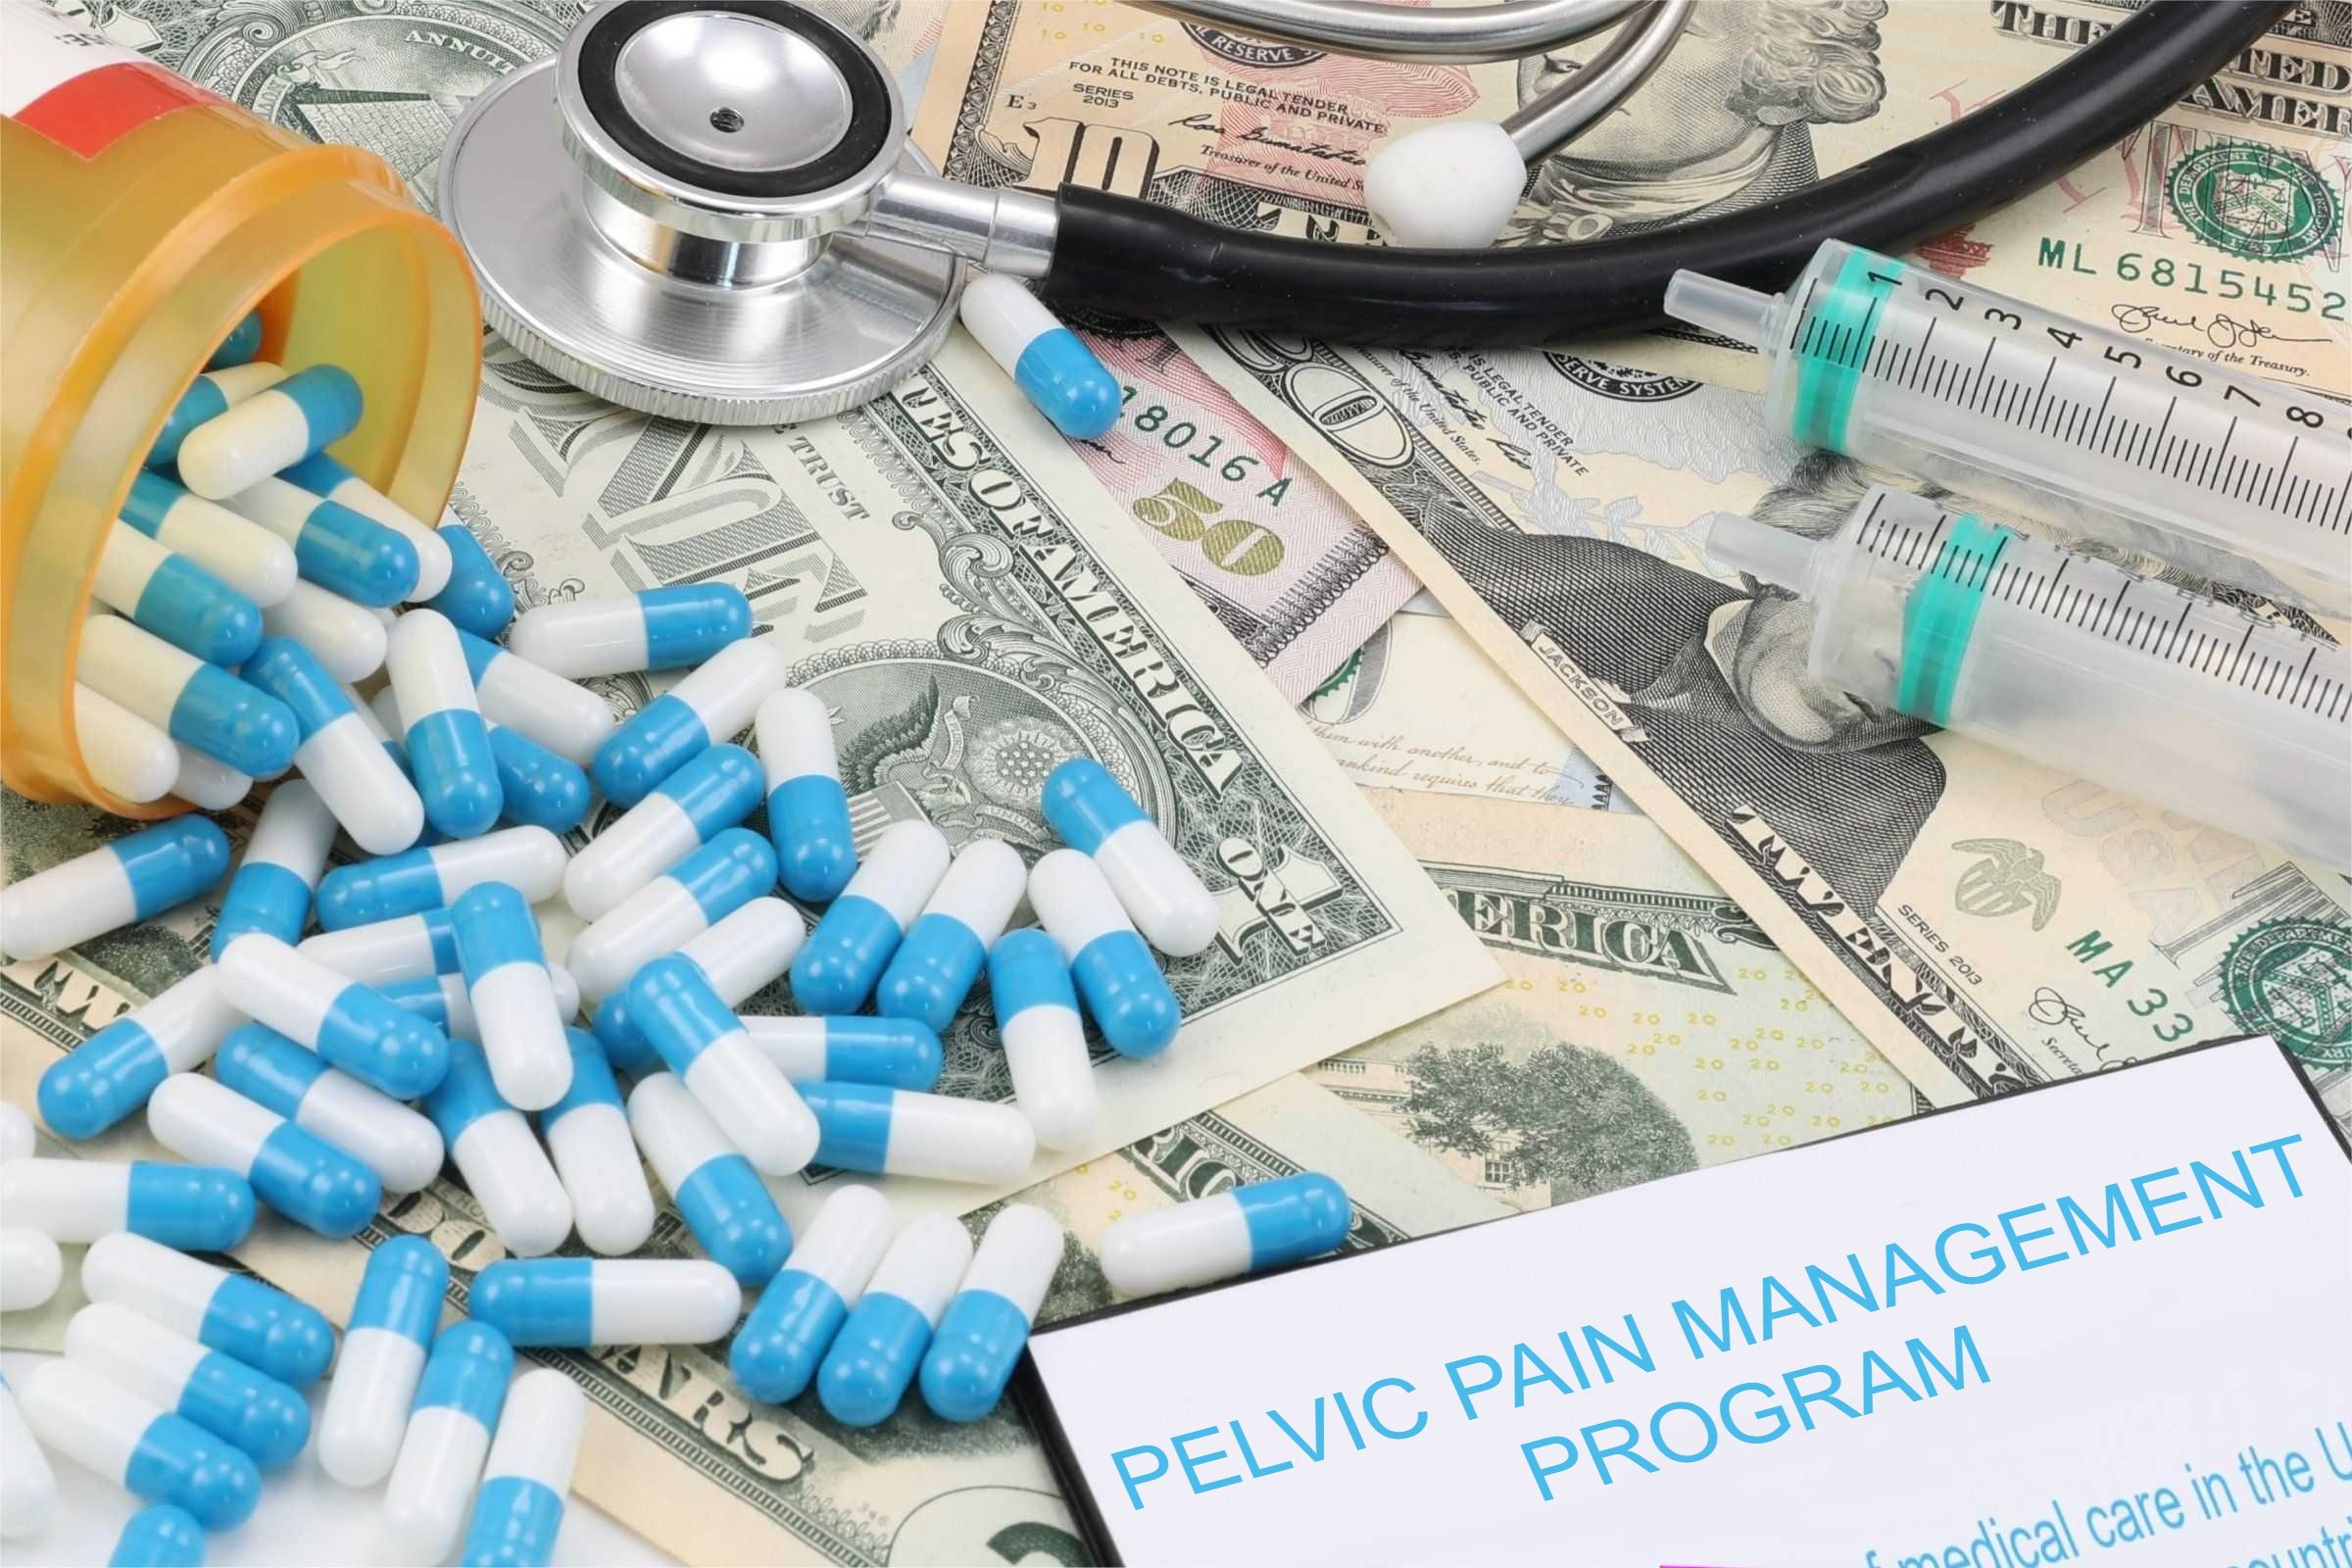 pelvic pain management program